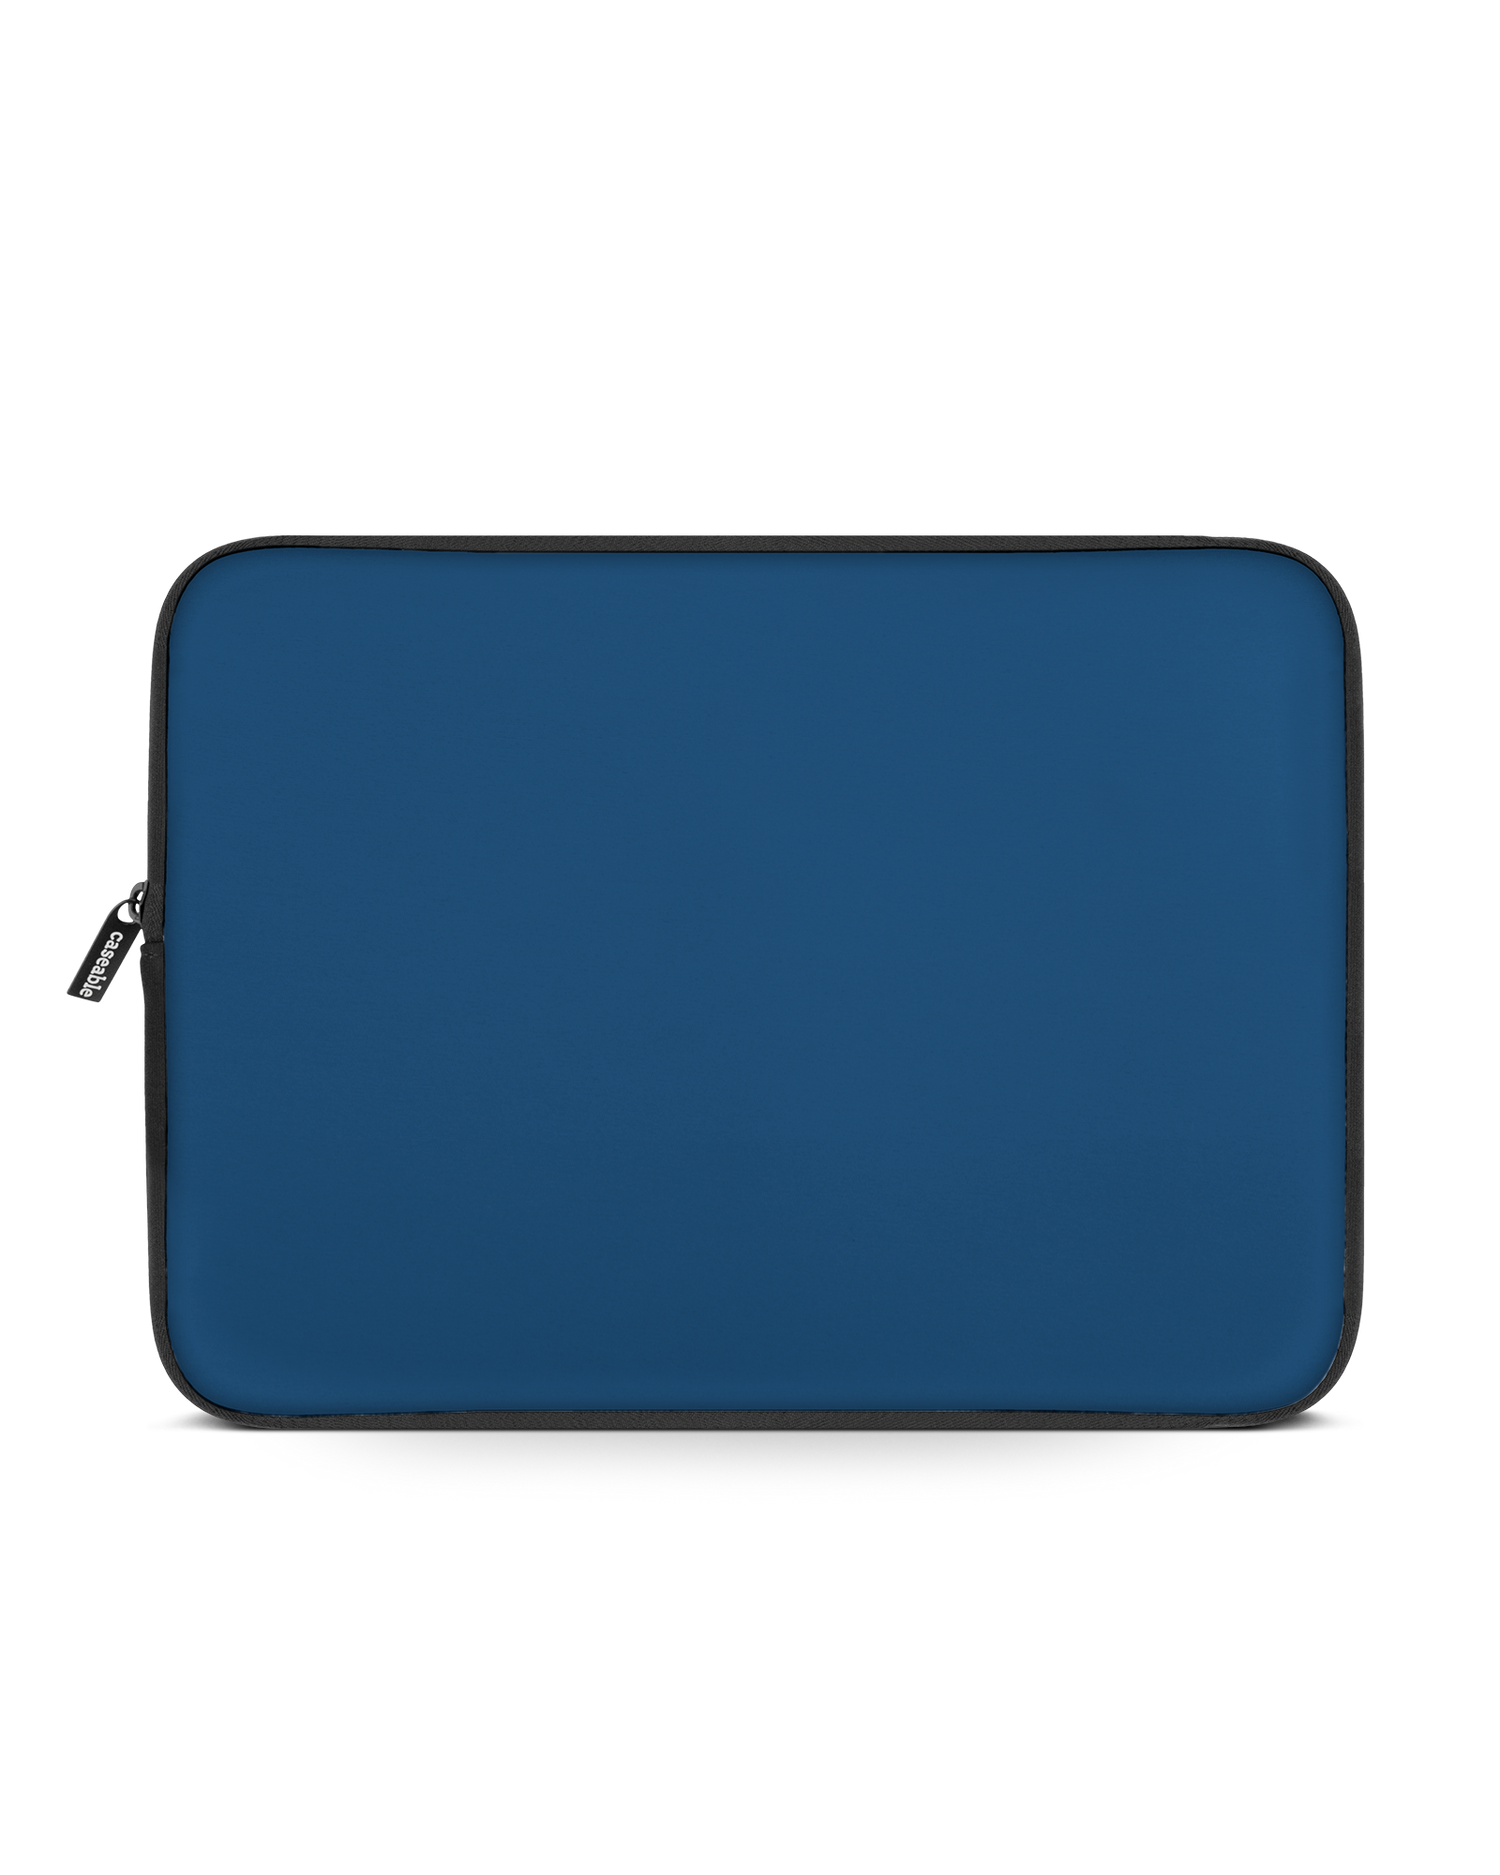 CLASSIC BLUE Laptop Case 15 inch: Front View